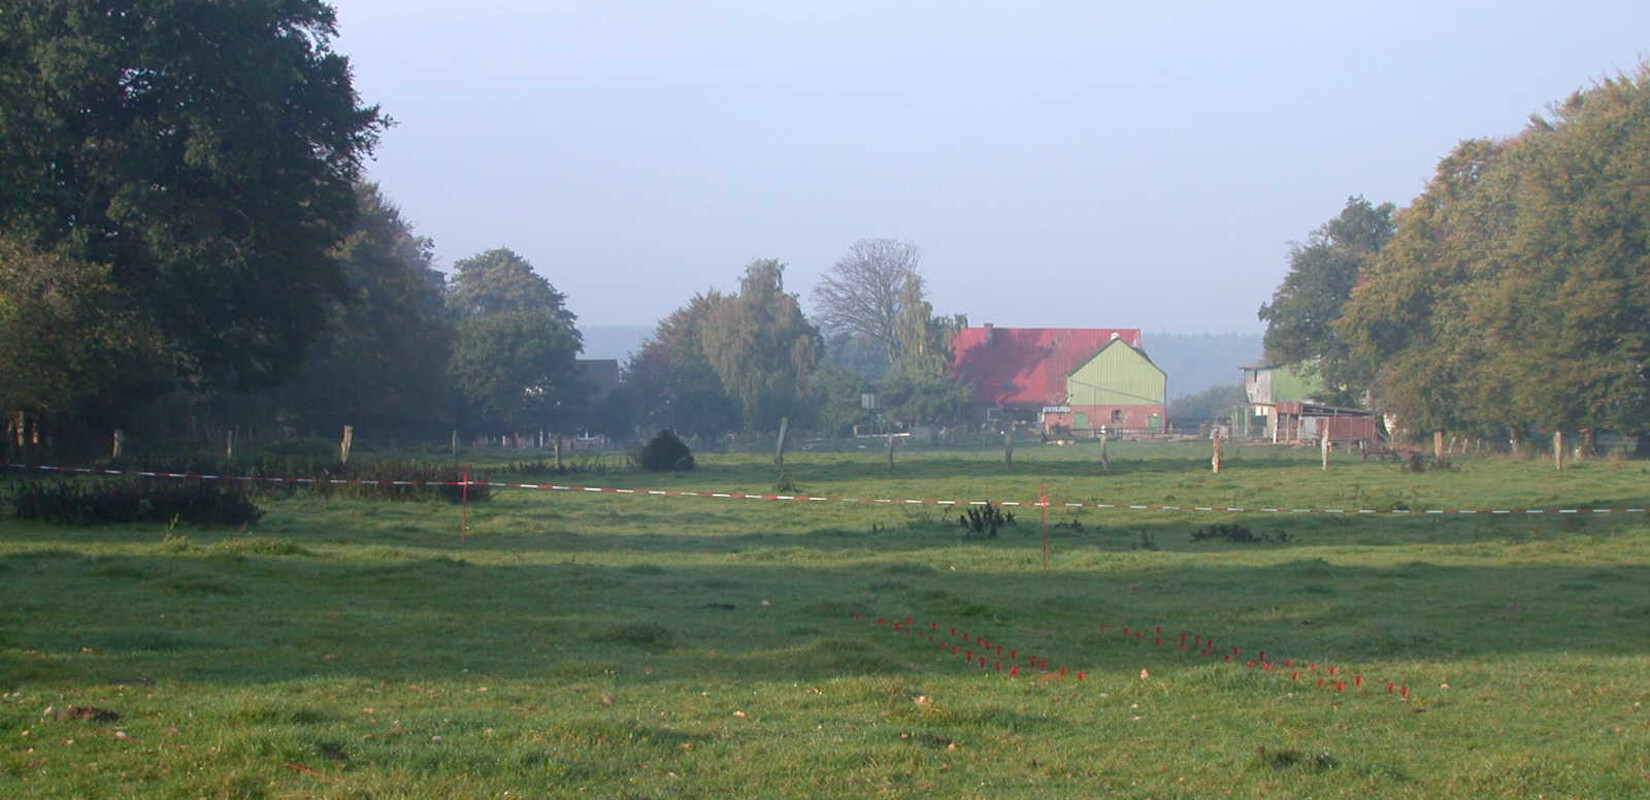 An agragrian landscape.